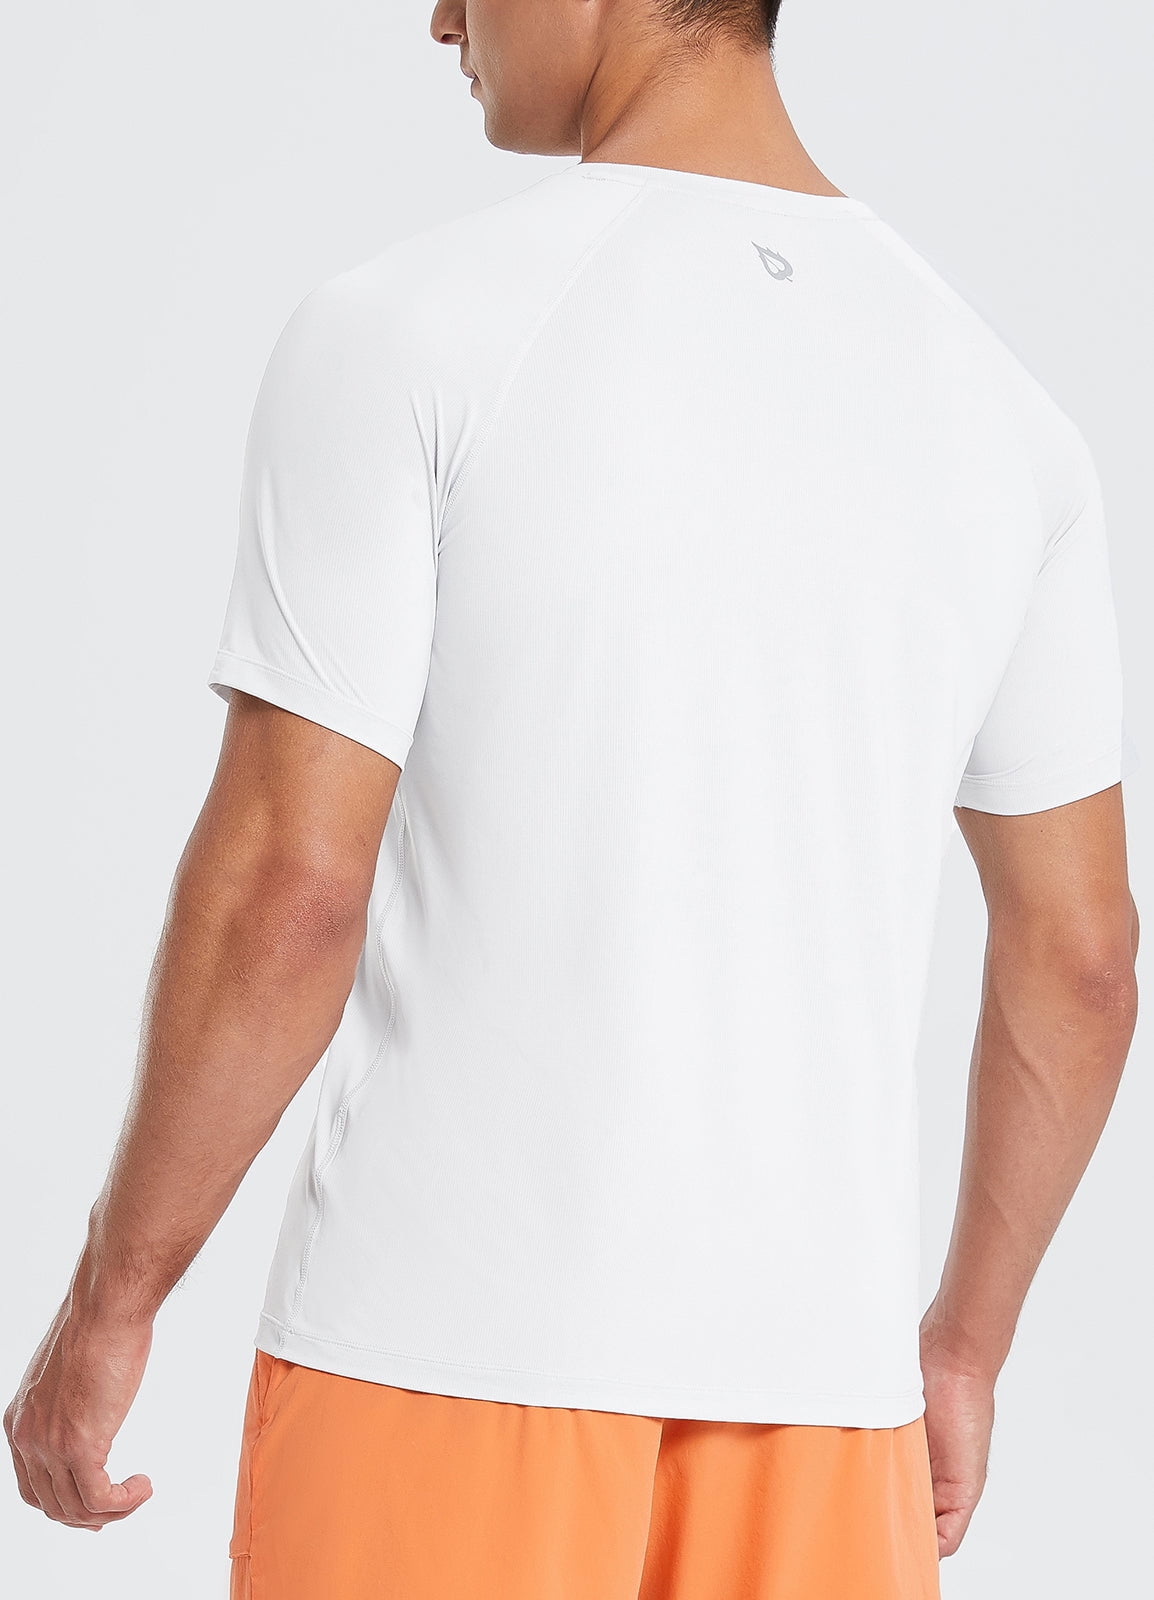 Teen Men Cotton Short Sleeve T-Shirts Sport Fitness Crew Neck Tee Tops